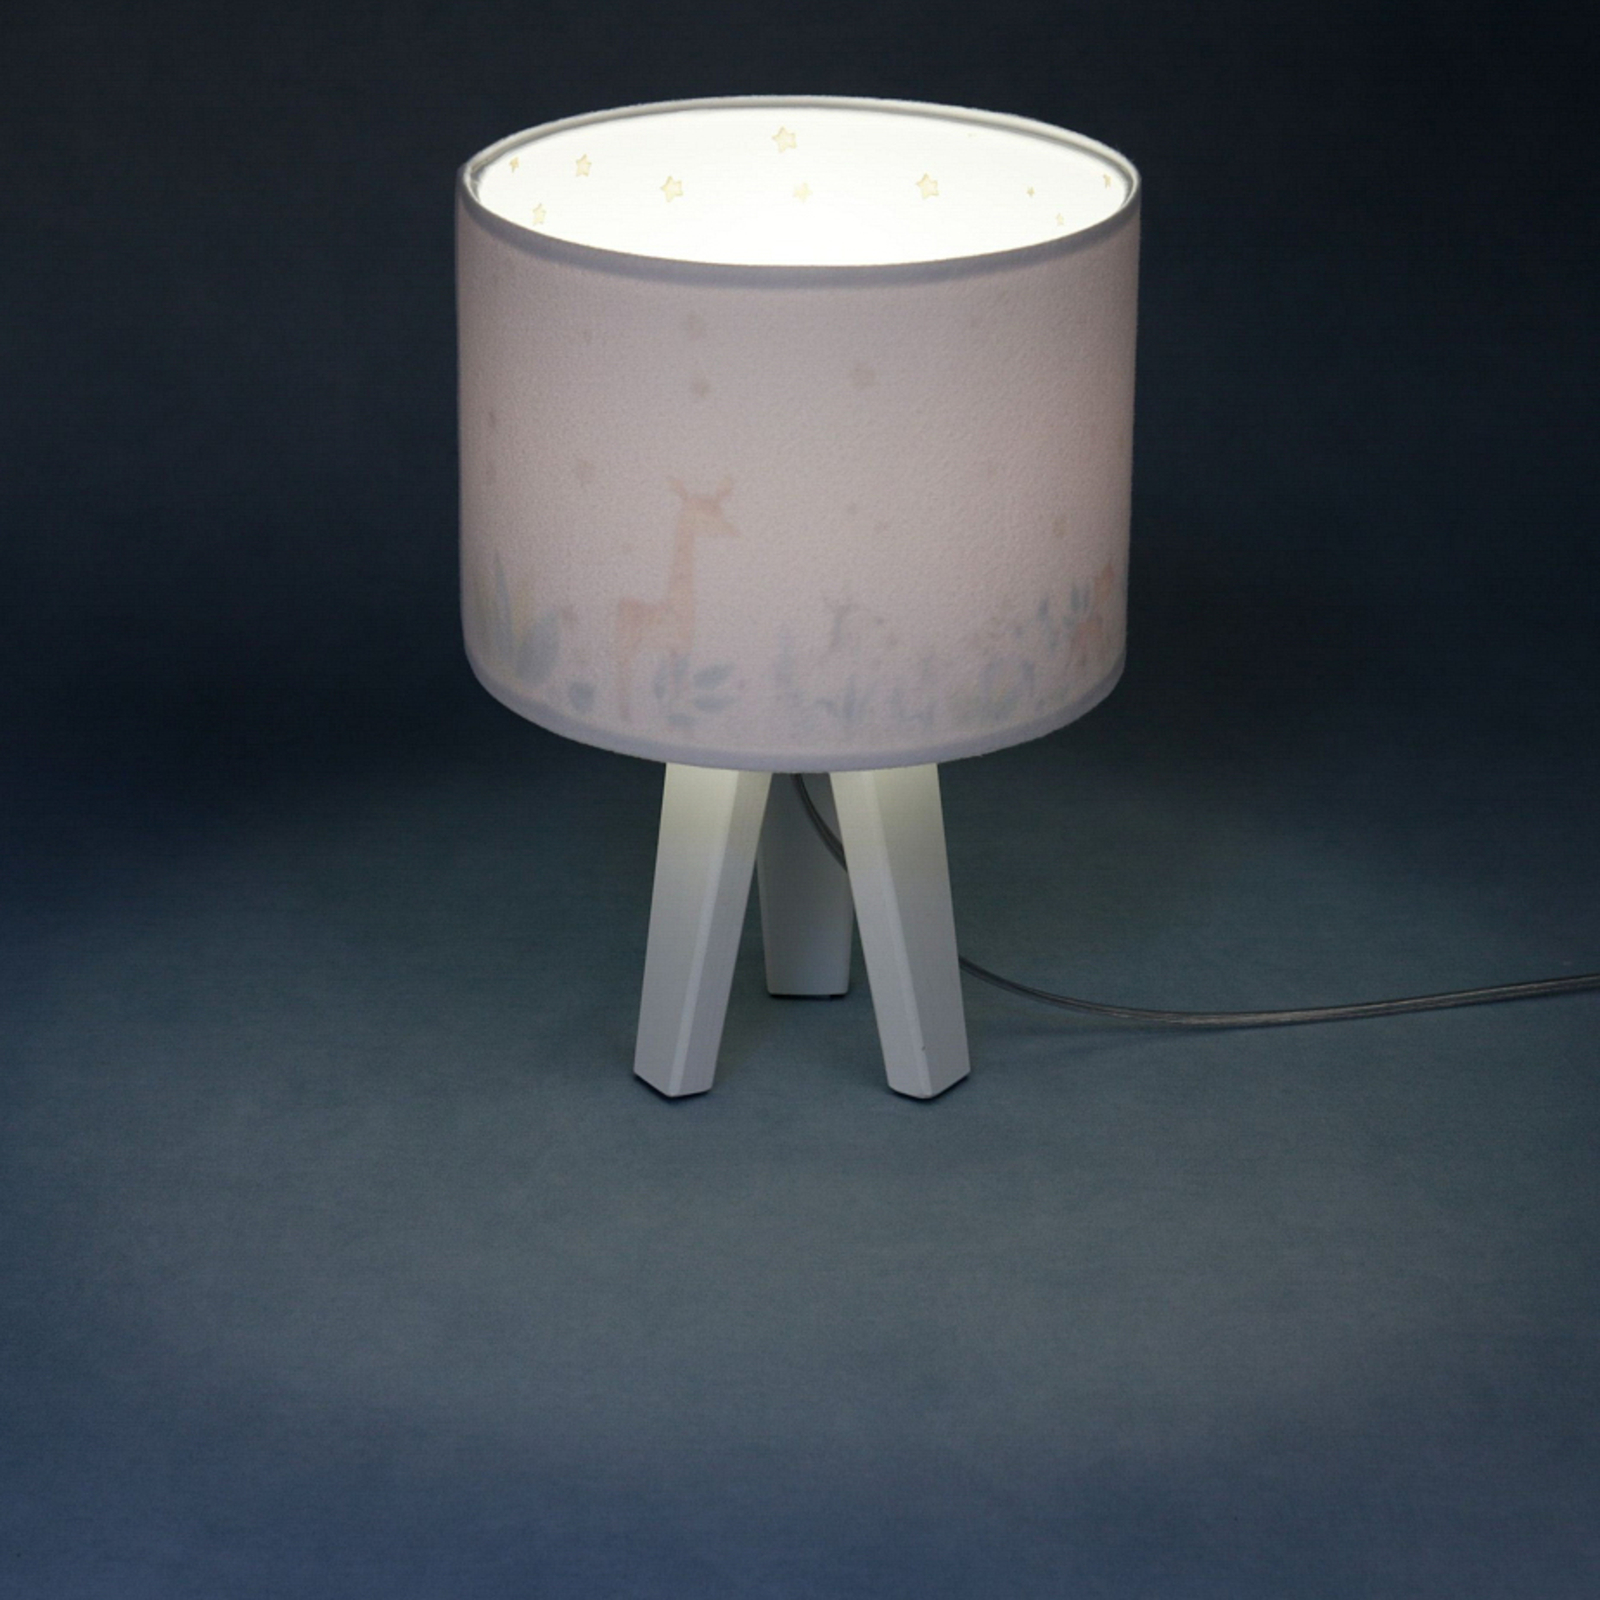 Max children’s table lamp, tripod frame